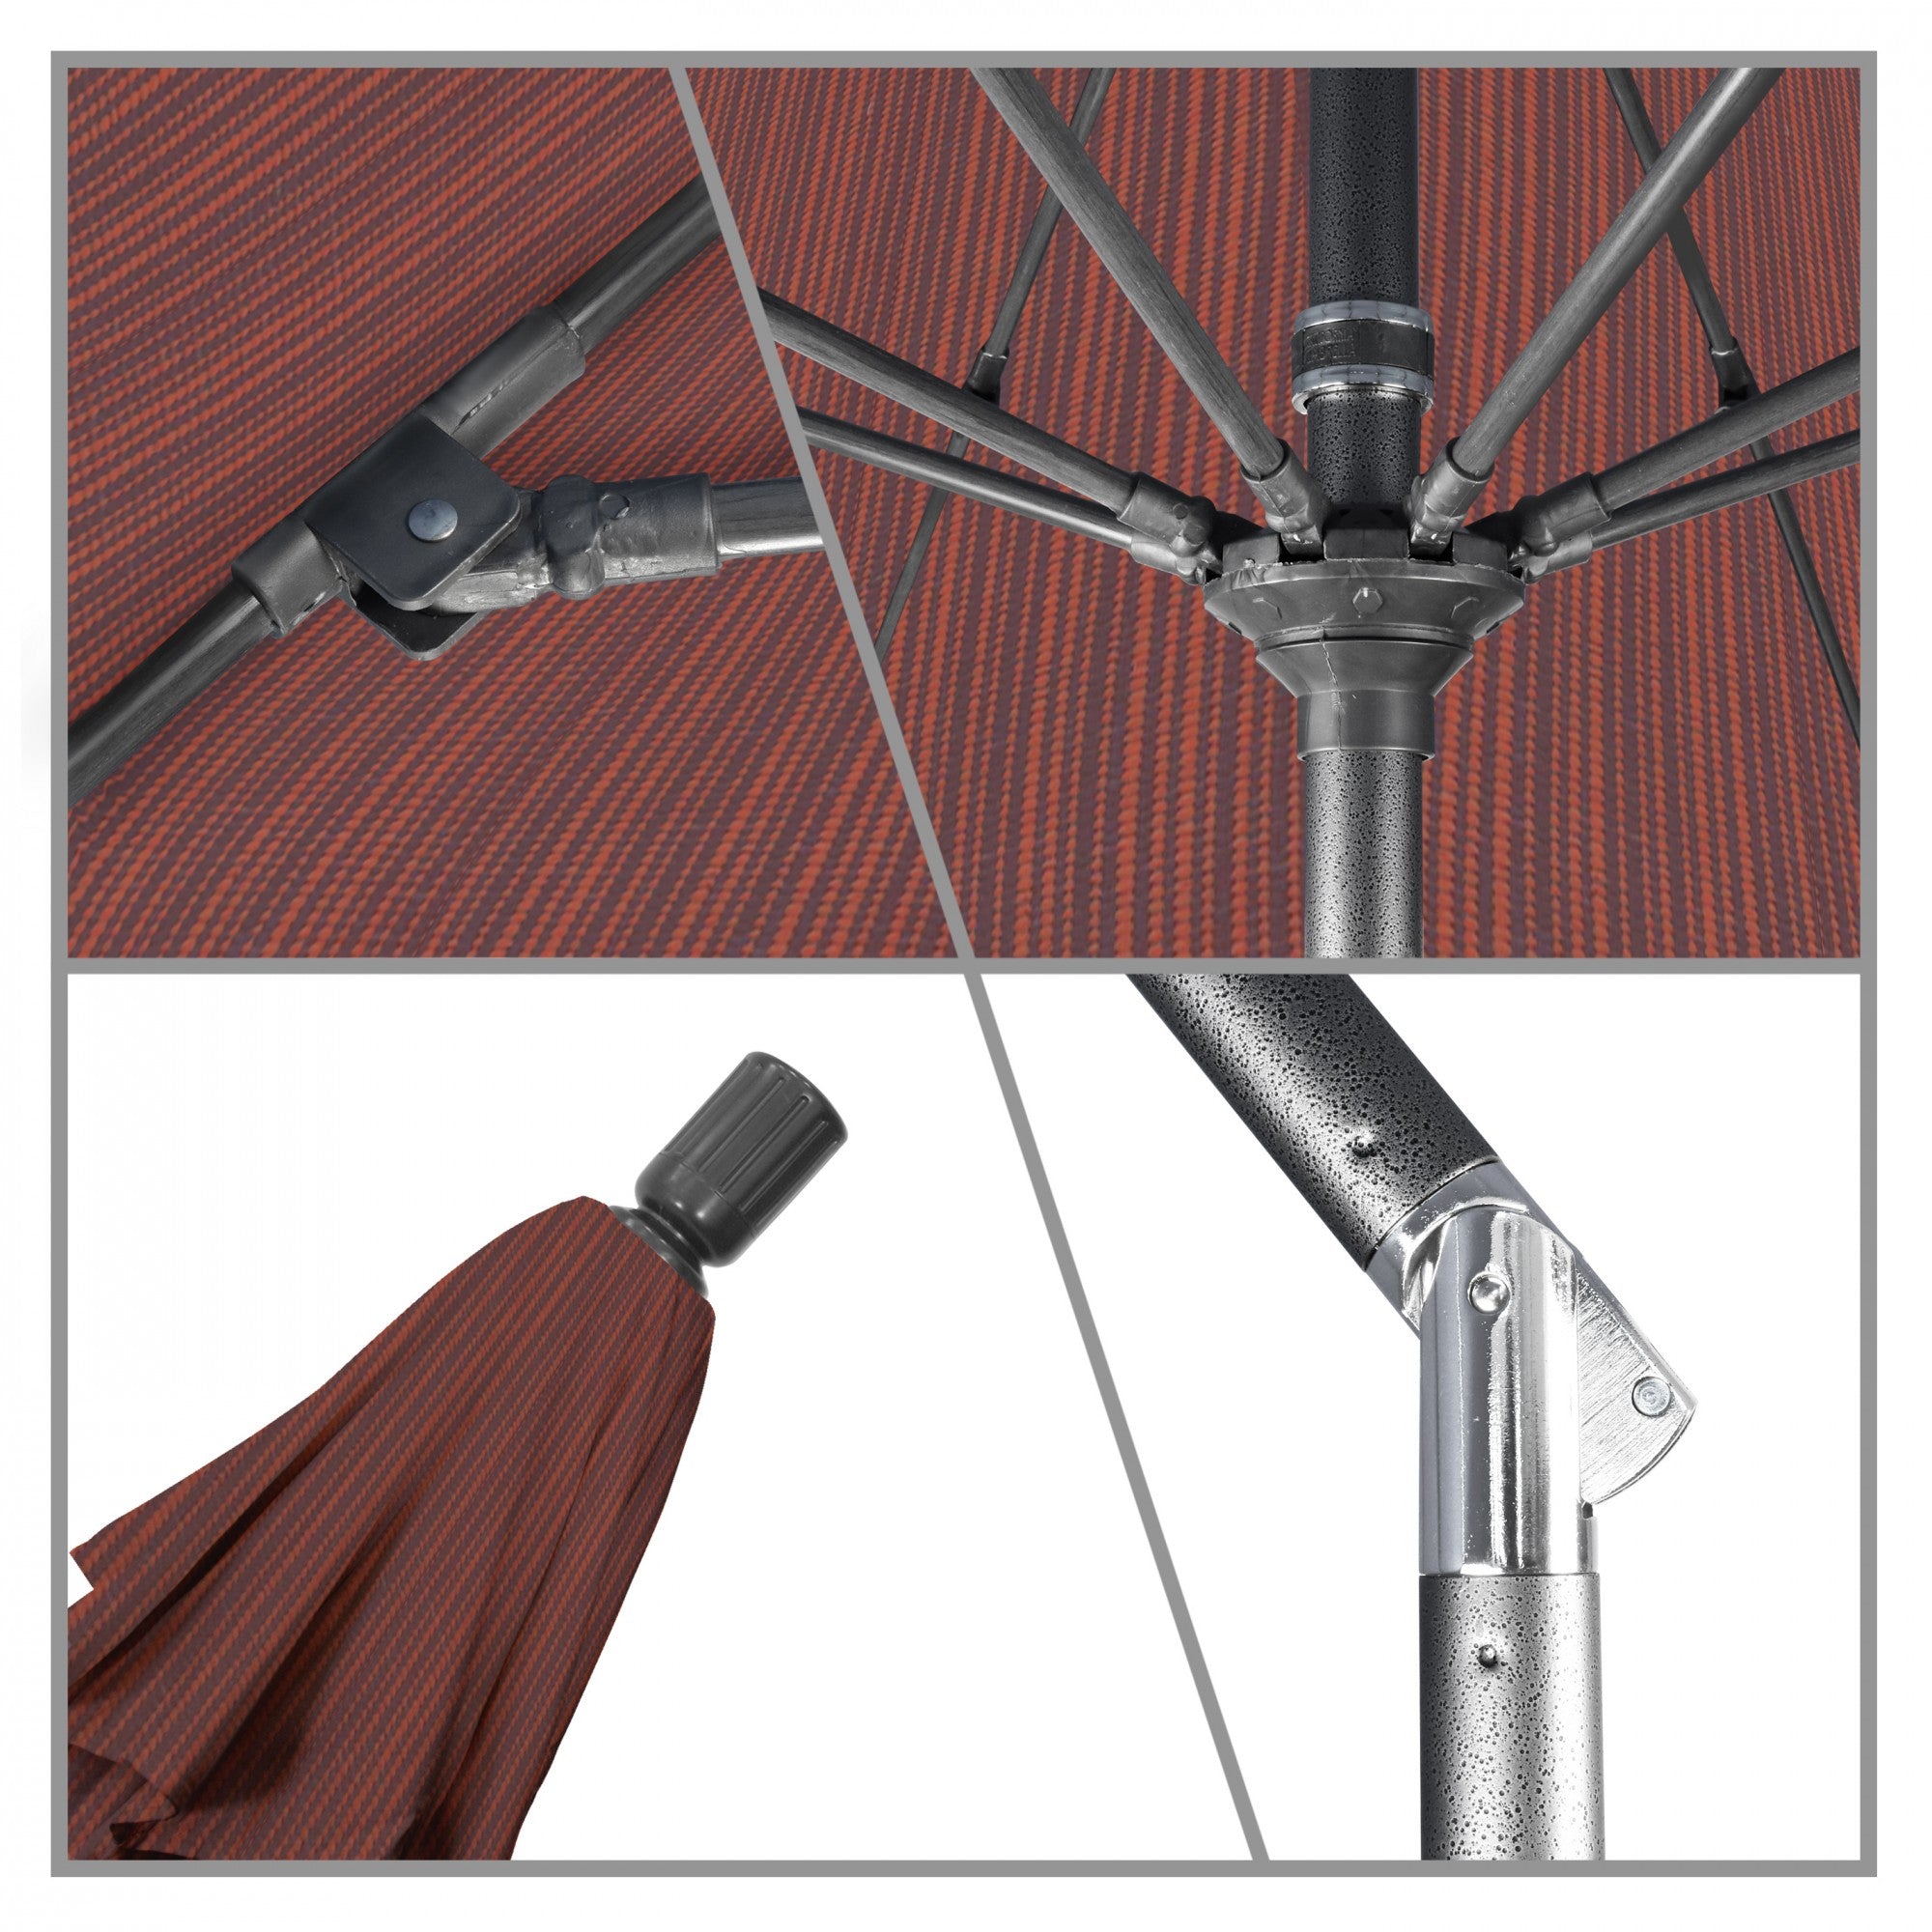 California Umbrella - 9' - Patio Umbrella Umbrella - Aluminum Pole - Terrace Adobe - Olefin - GSCUF908010-FD12